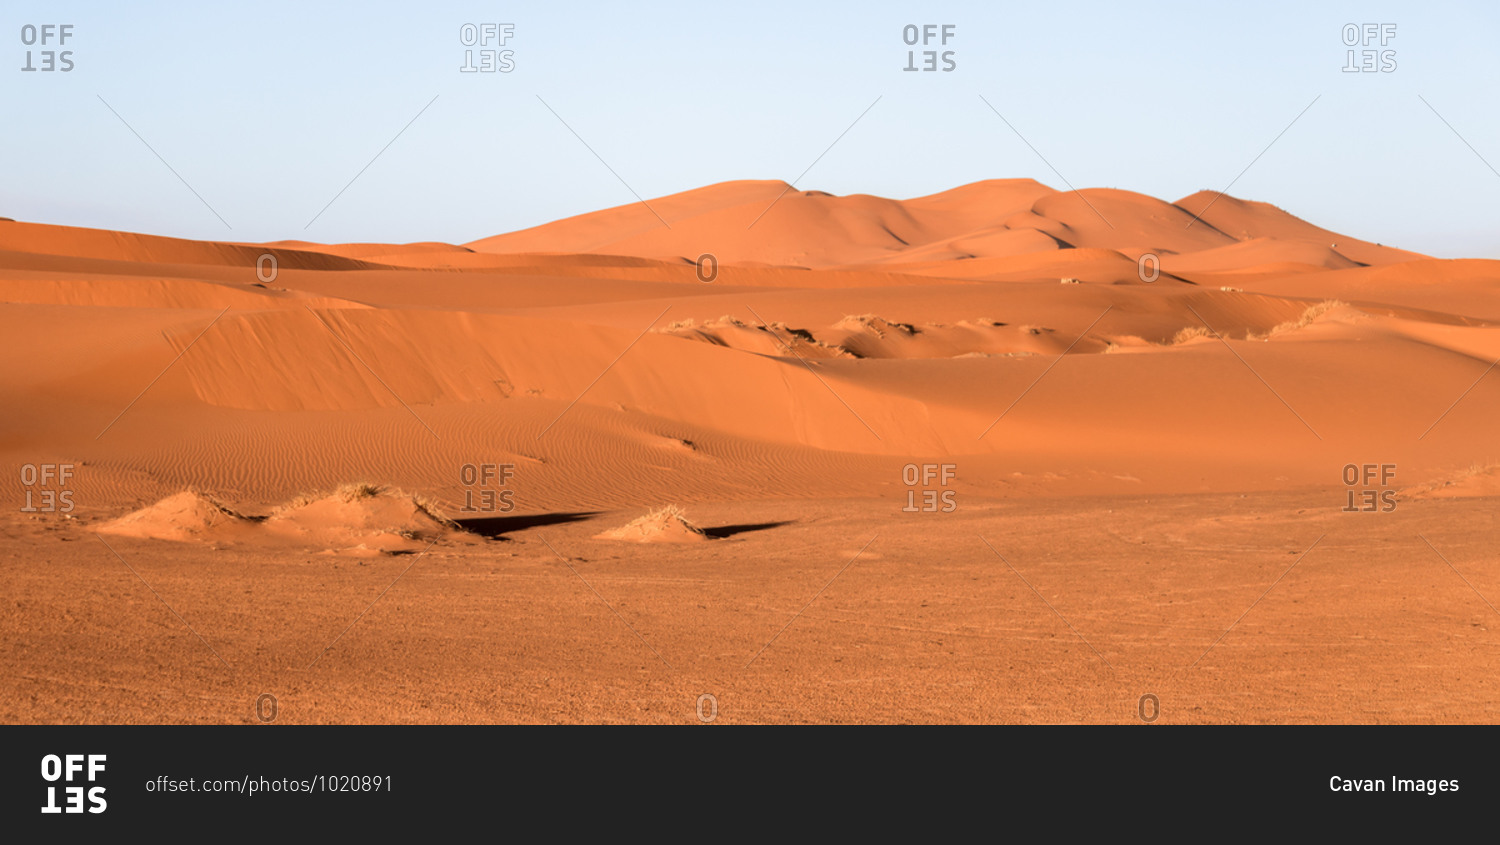 Panoramic view of the desert dunes of erg chebbi, morocco